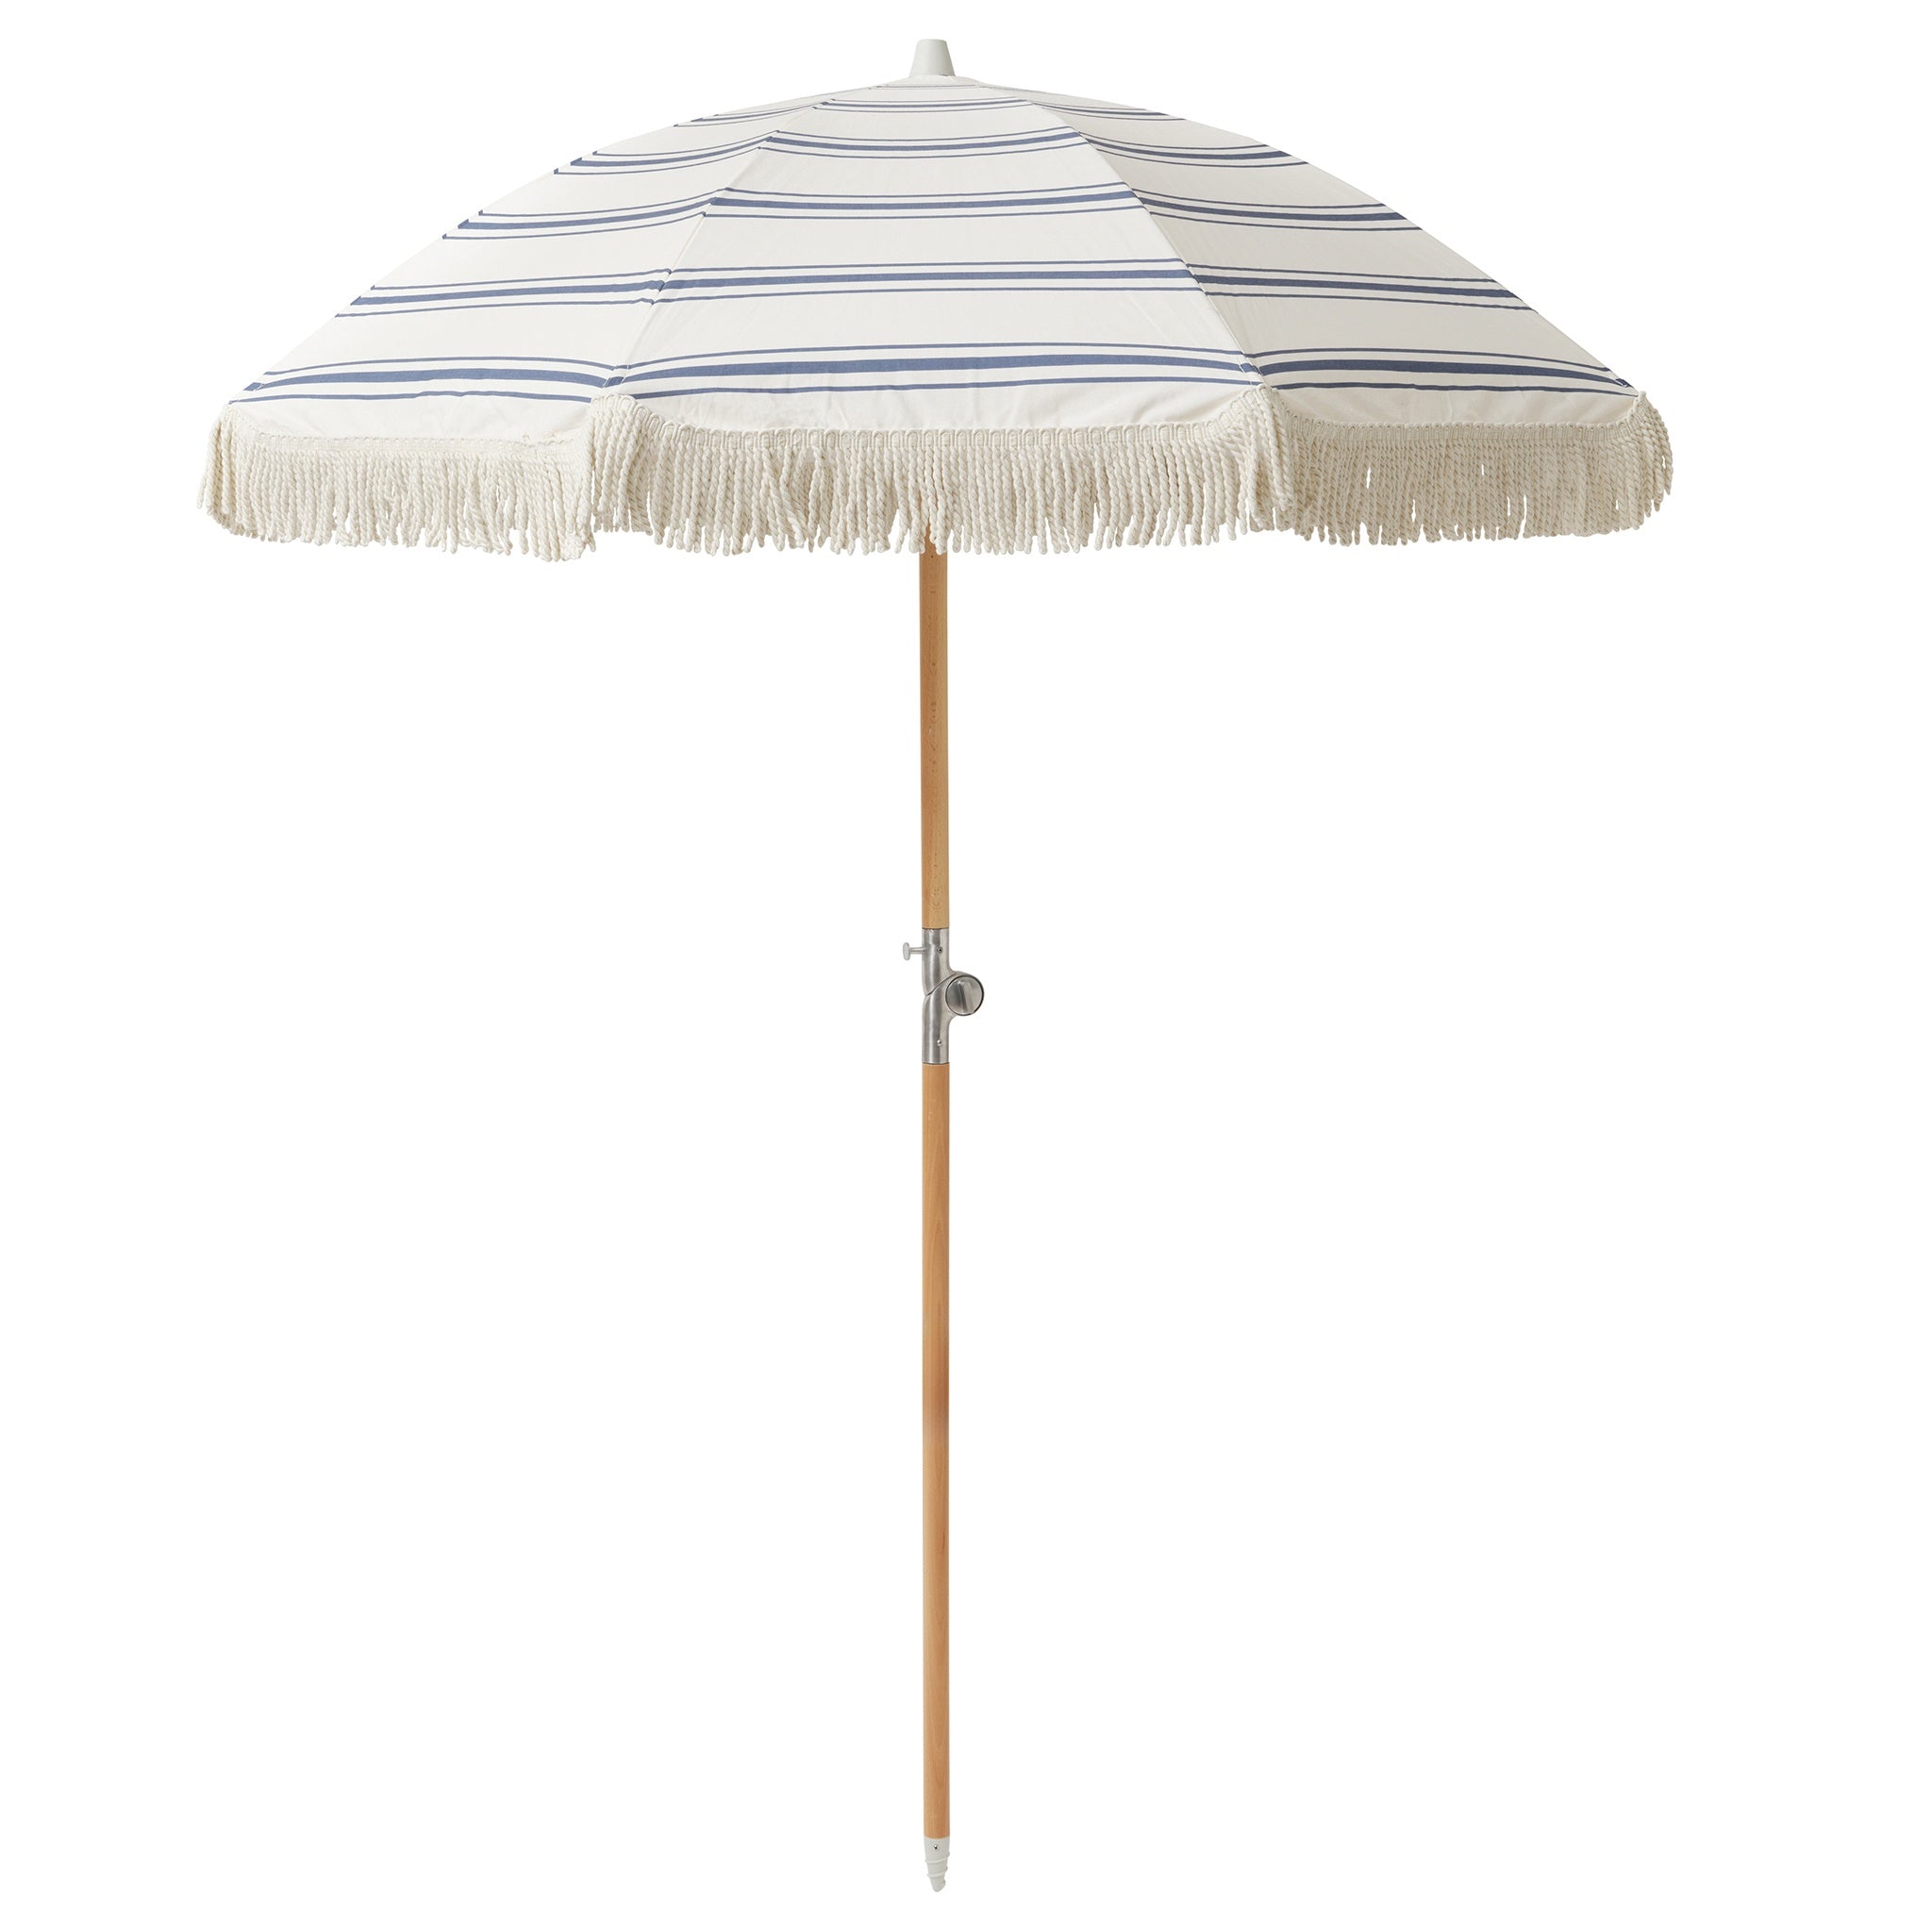 The Resort Luxe Beach Umbrella